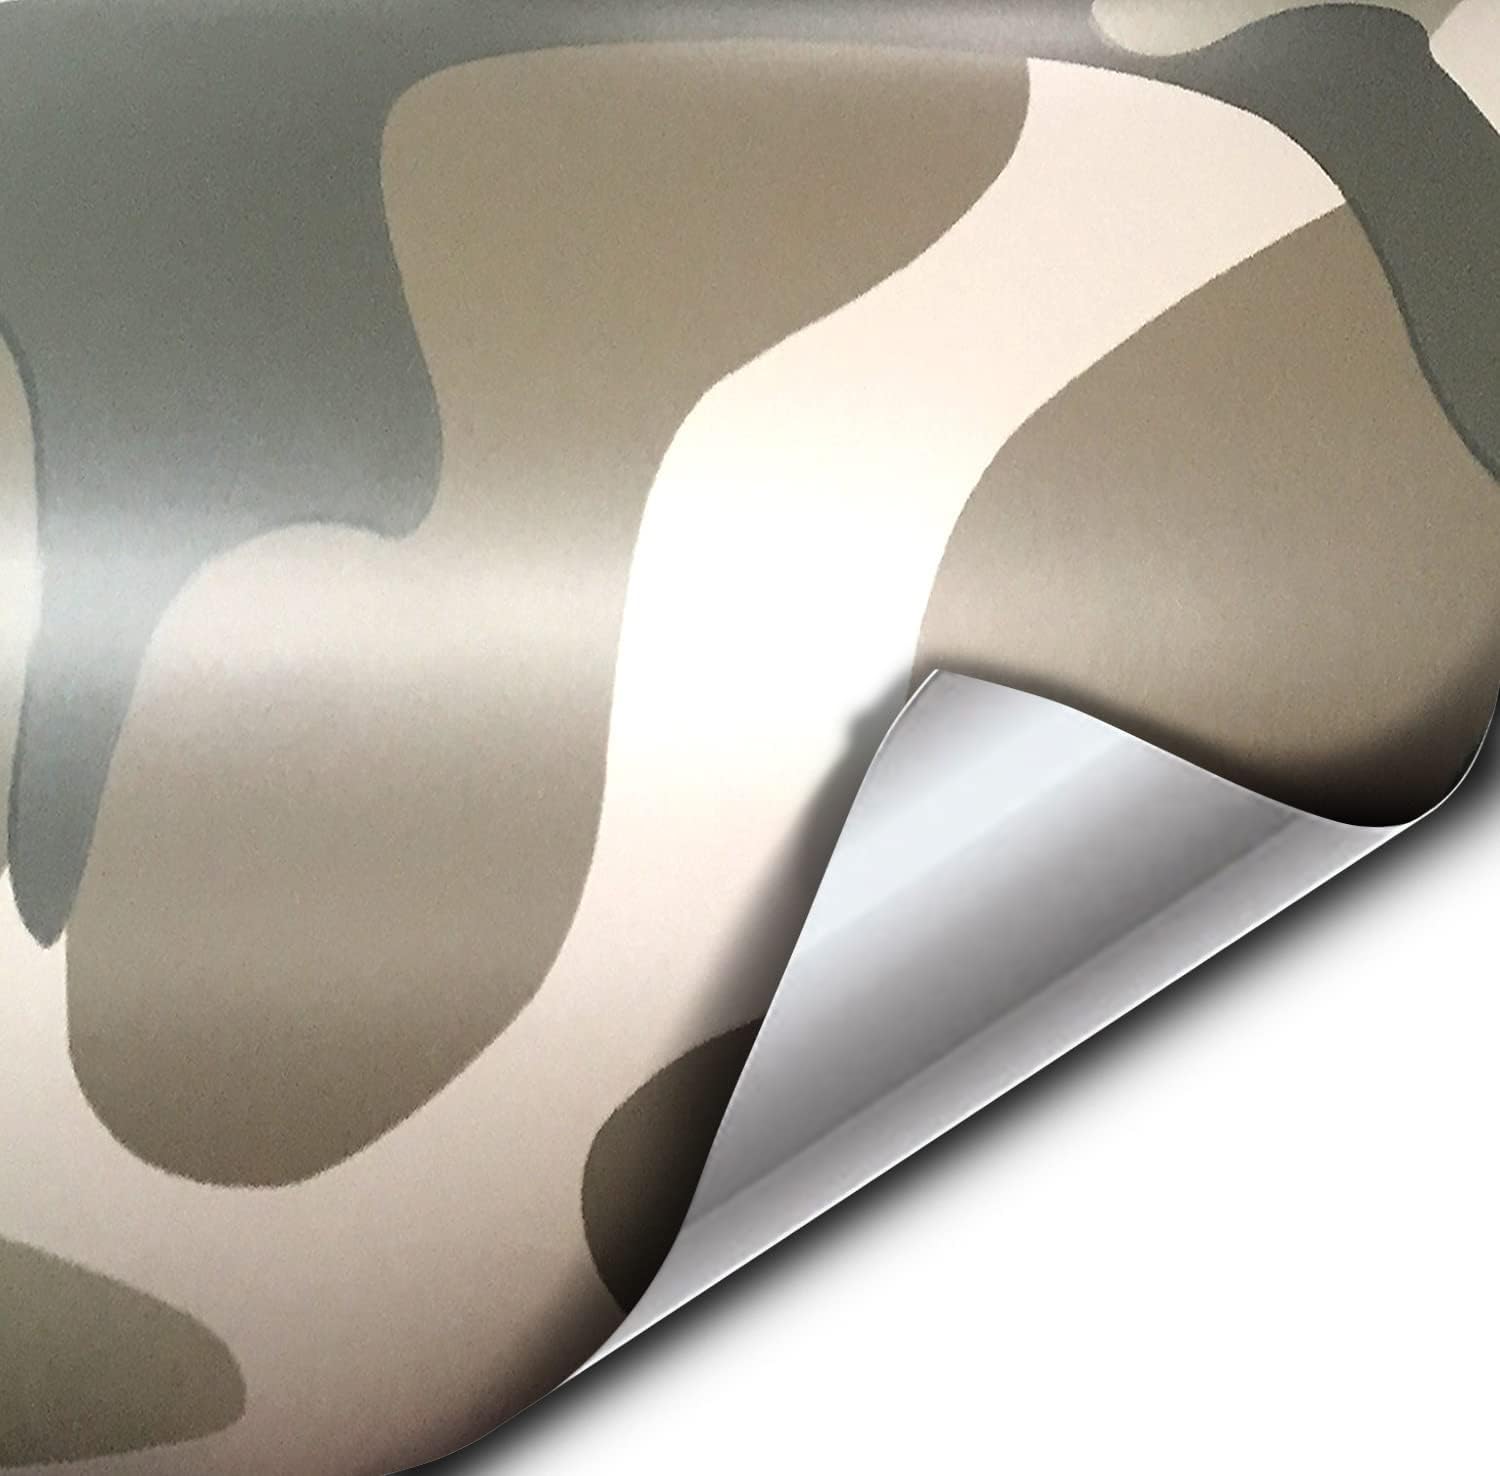 VViViD+ Desert Camouflage Pattern (100ft x 5ft) - W.D